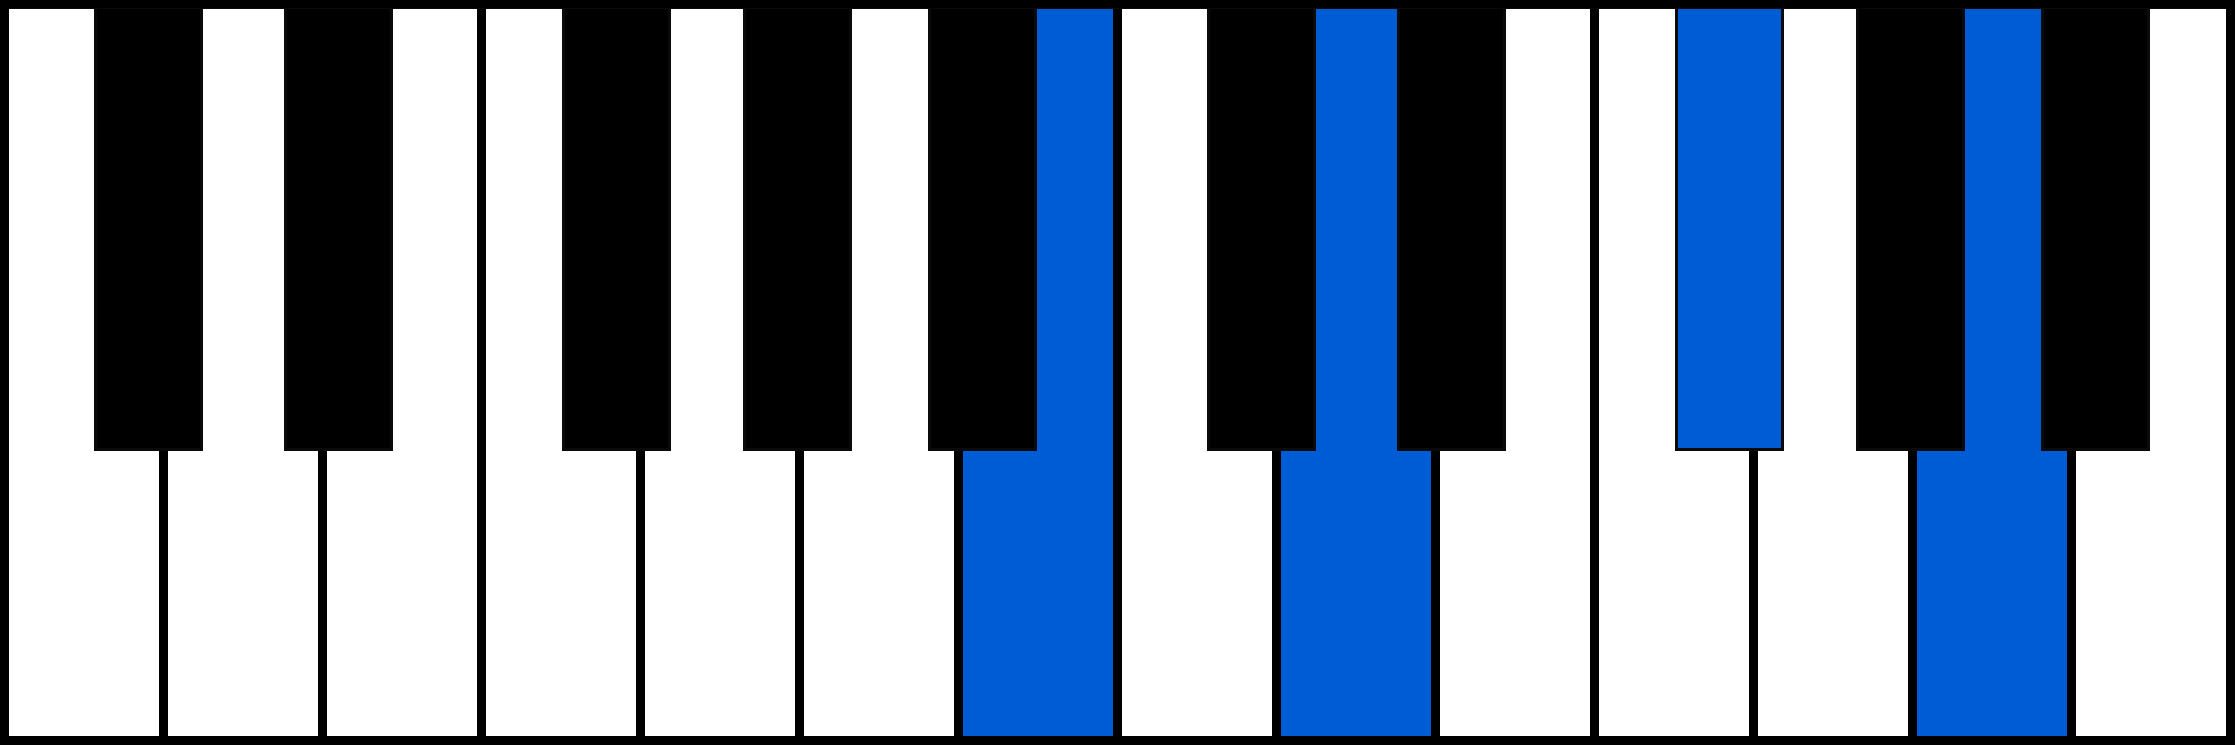 Bm7 piano chord fingering